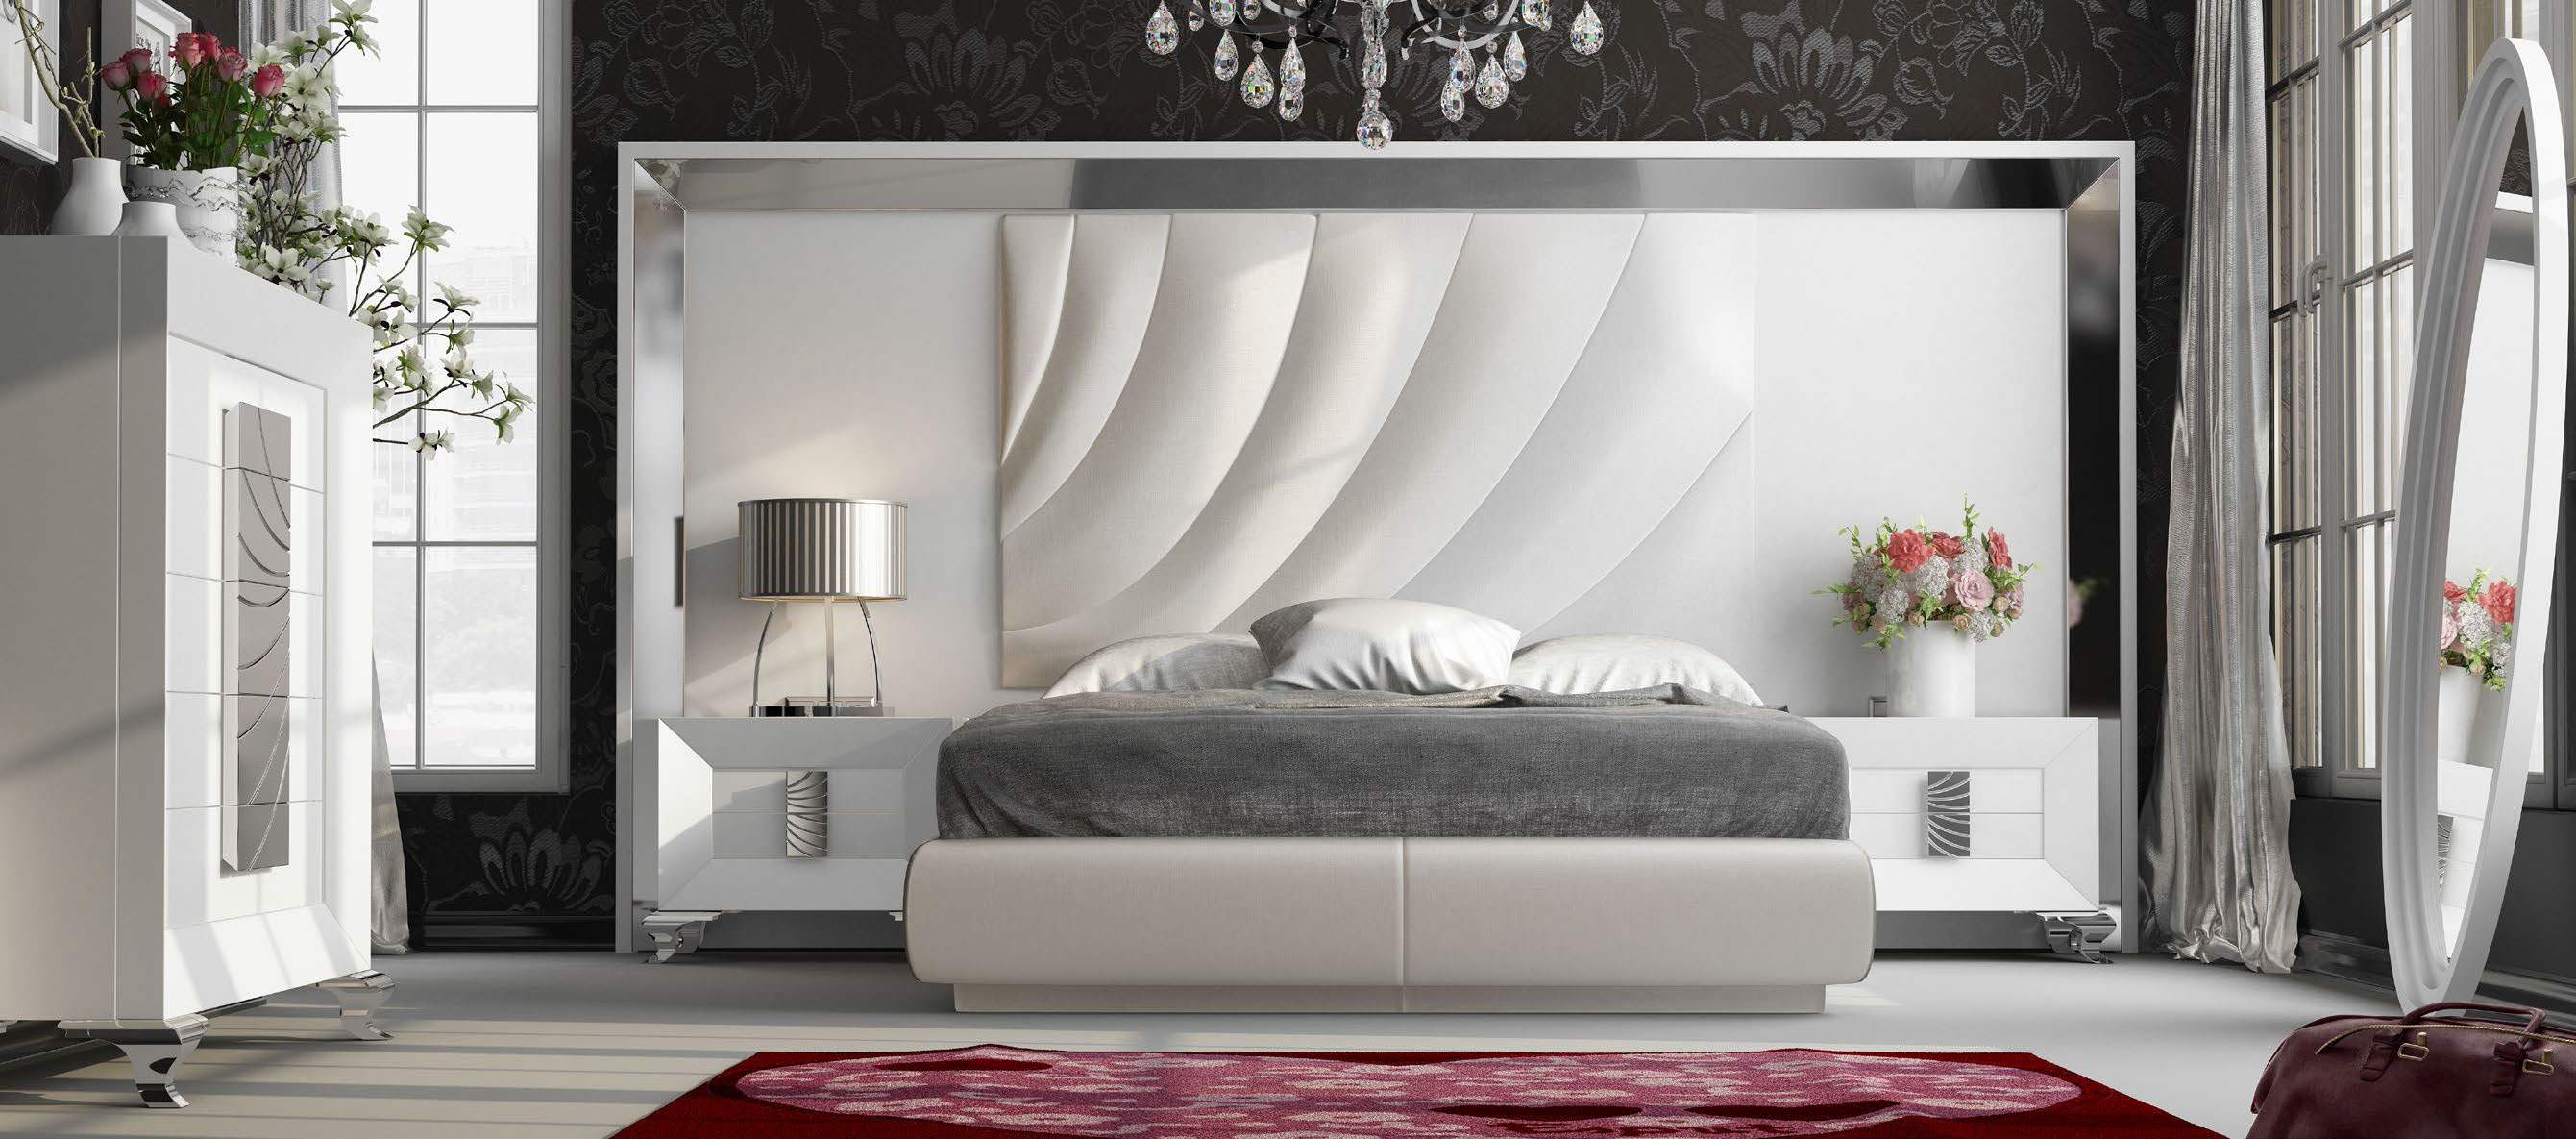 Brands Franco Furniture Bedrooms vol1, Spain DOR 129